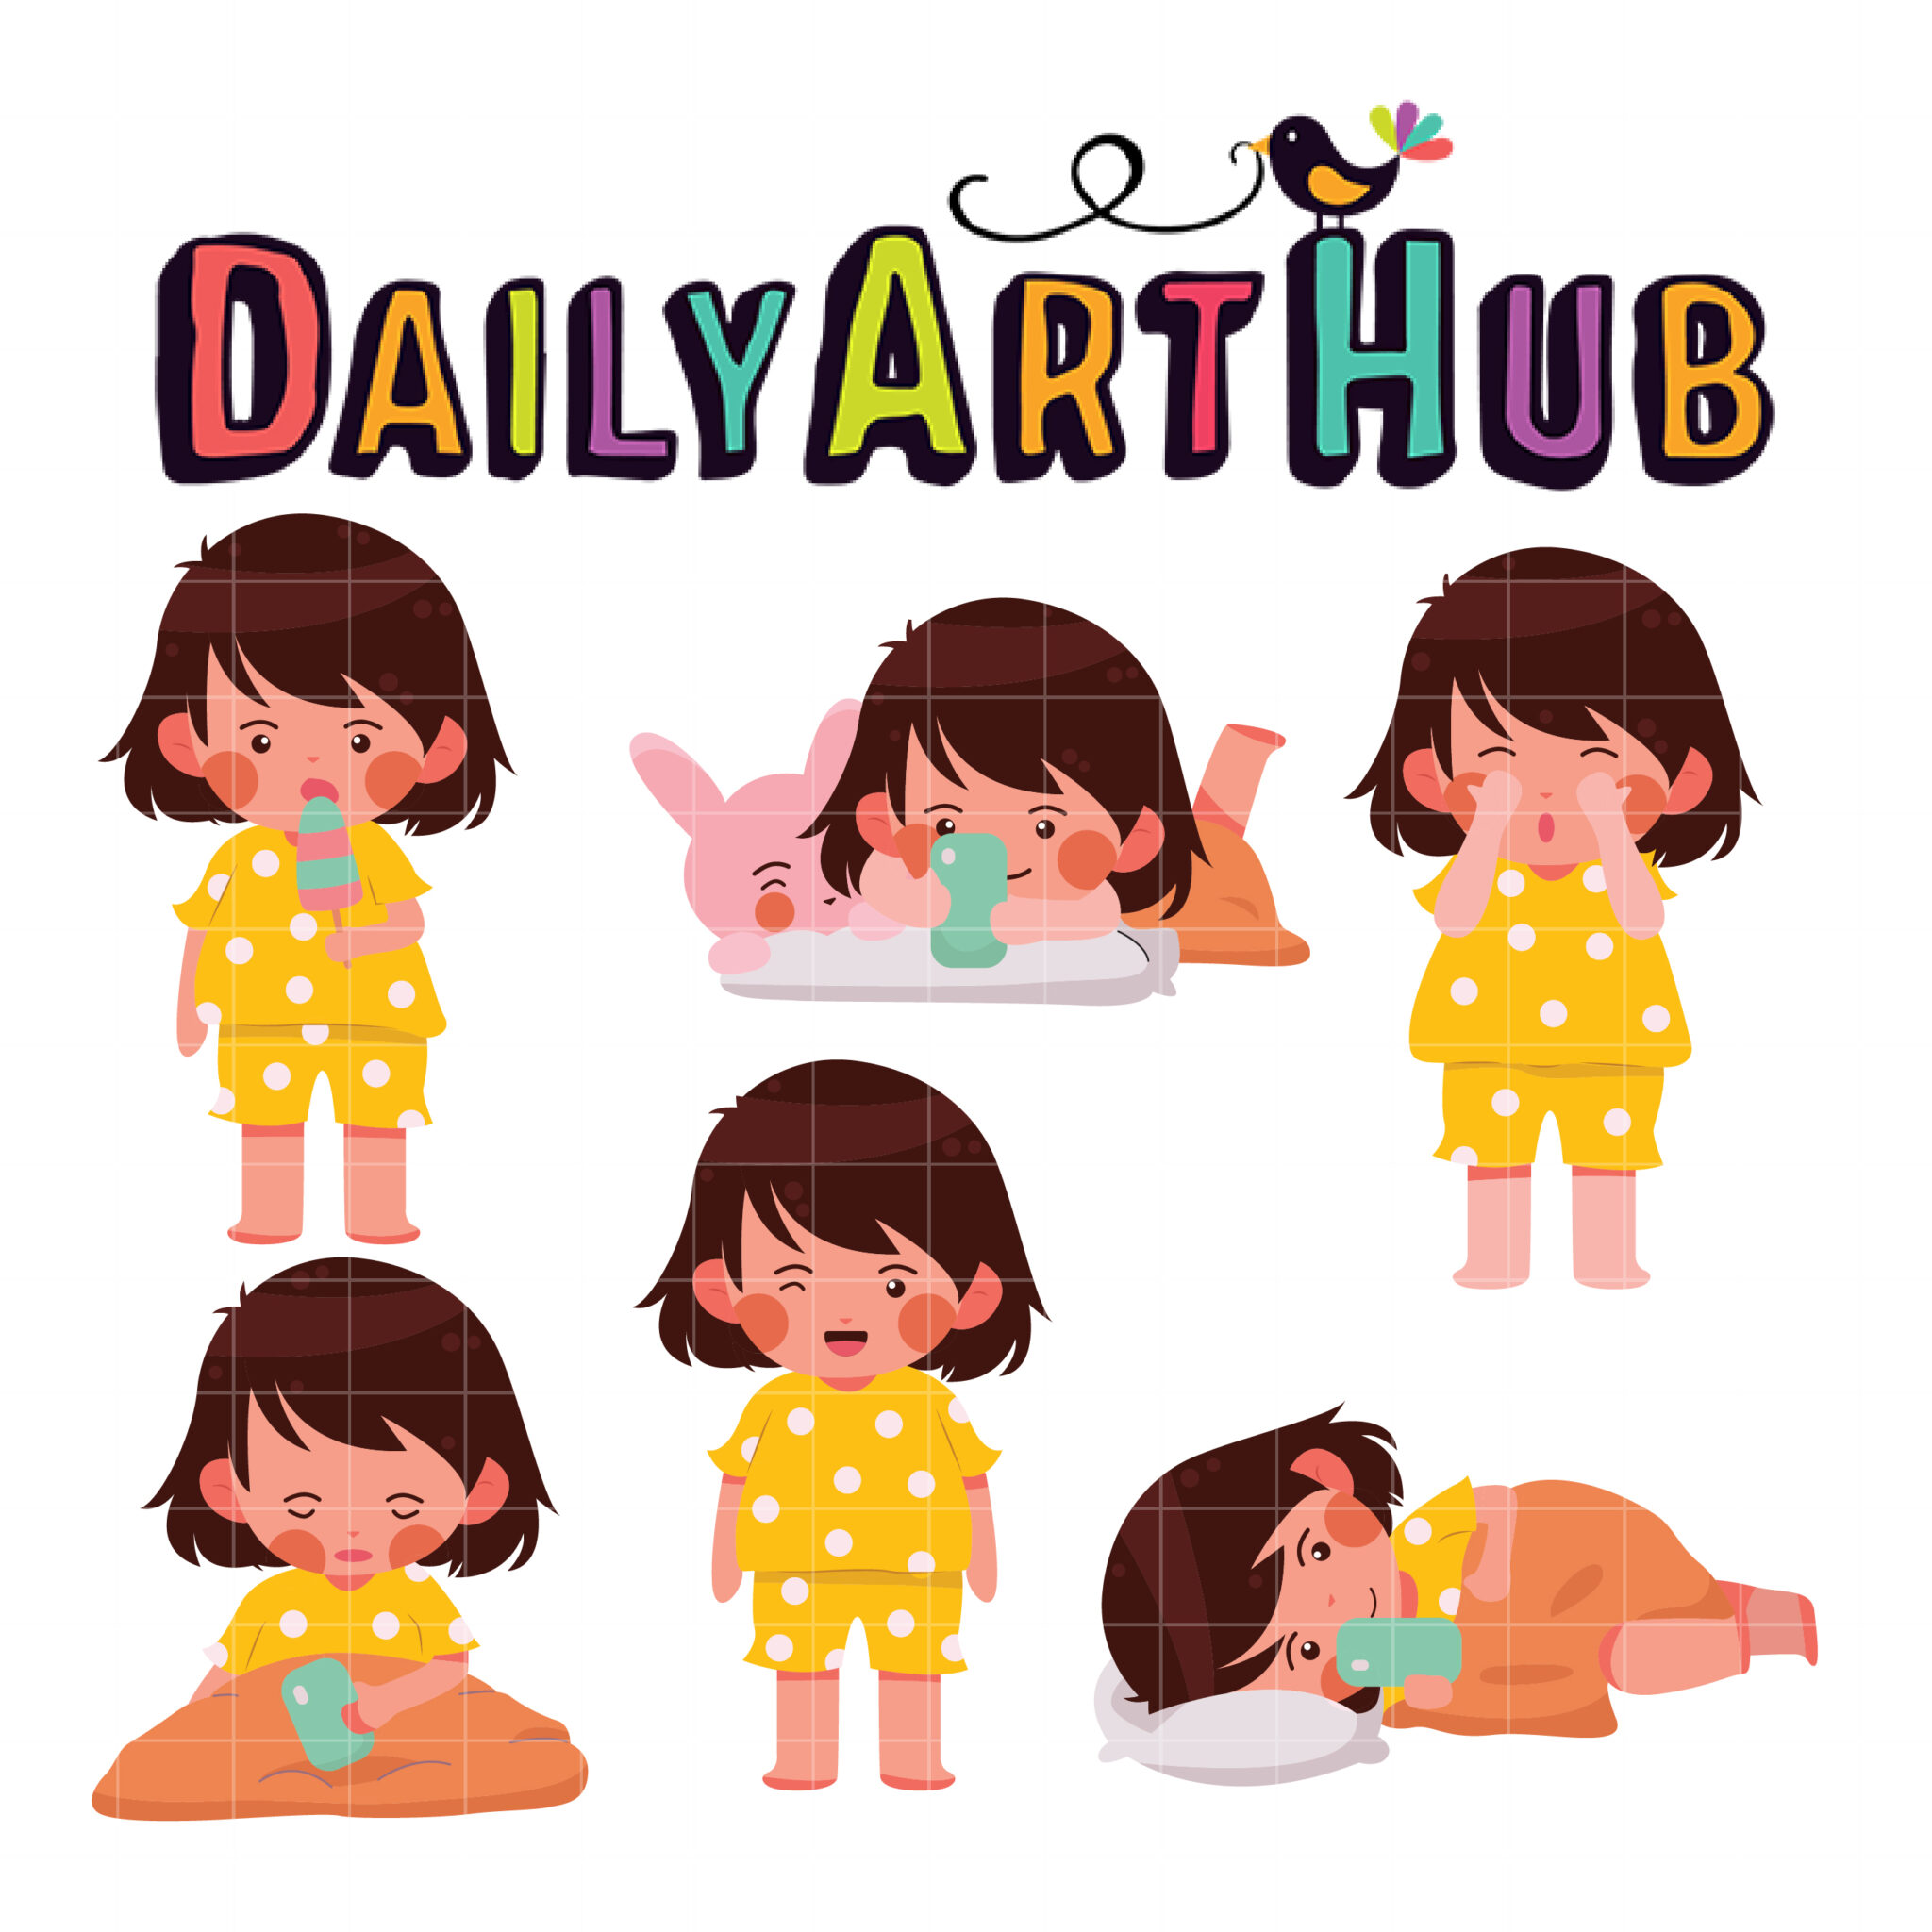 https://www.dailyarthub.com/wp-content/uploads/2020/08/Cute-Little-Girl-Character-scaled.jpg